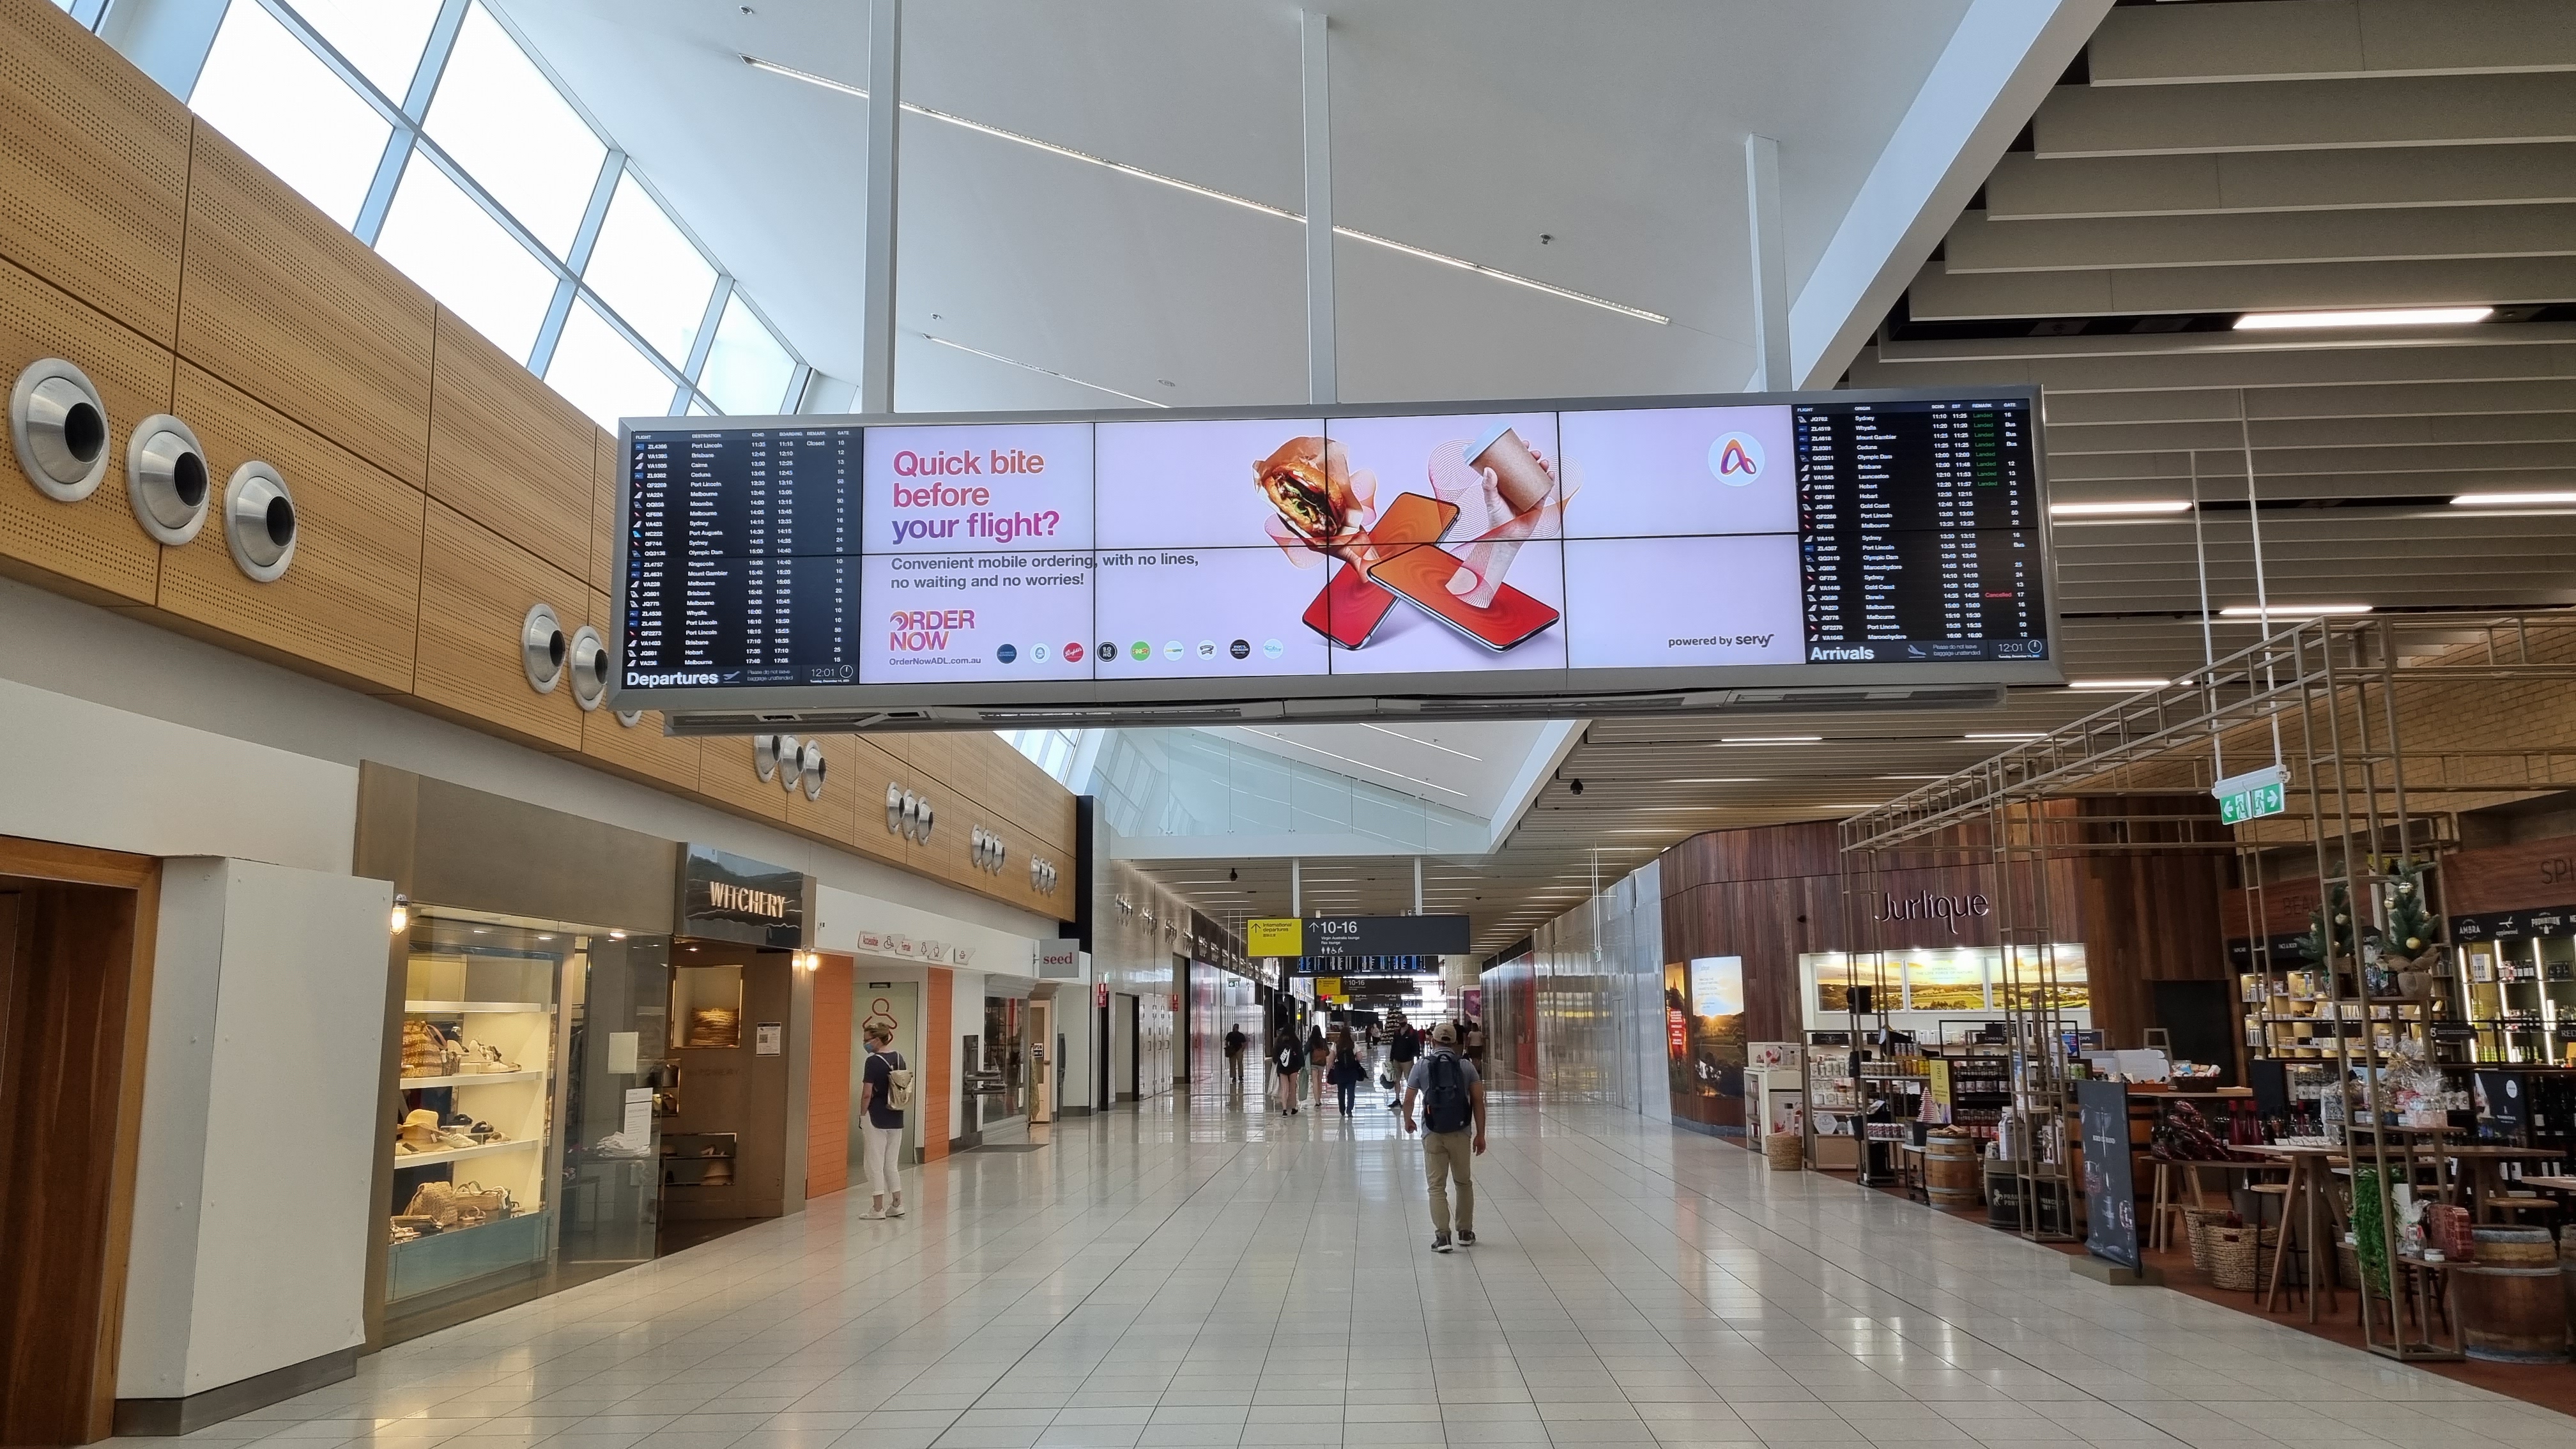 Servy expands Australian presence launching digital platform at Adelaide Airport